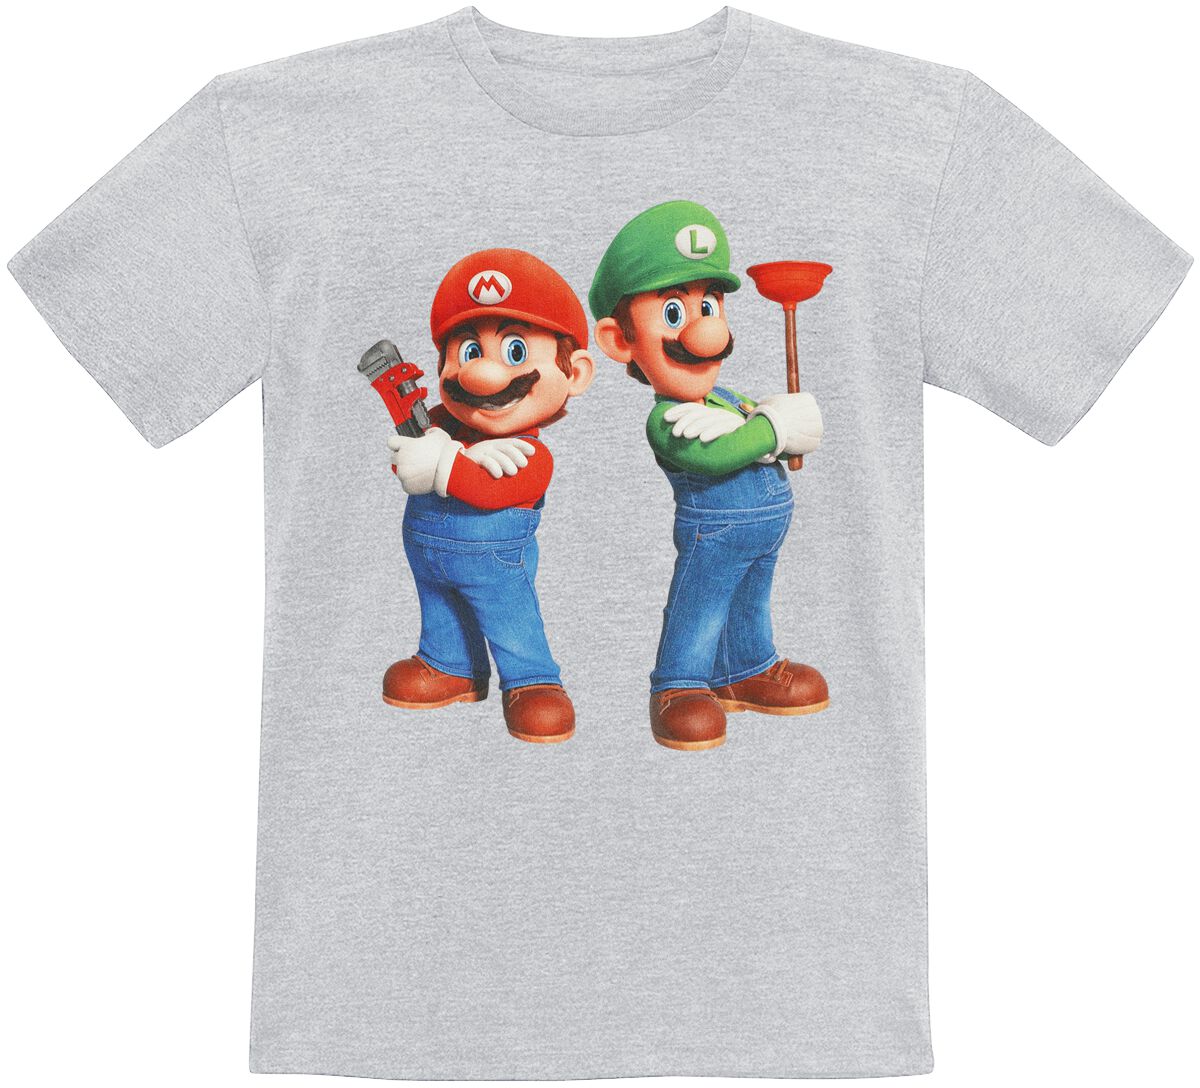 T-shirt Gaming de Super Mario - Kids - Plumbing Bros. - 104 à 152 - pour filles & garçonse - gris